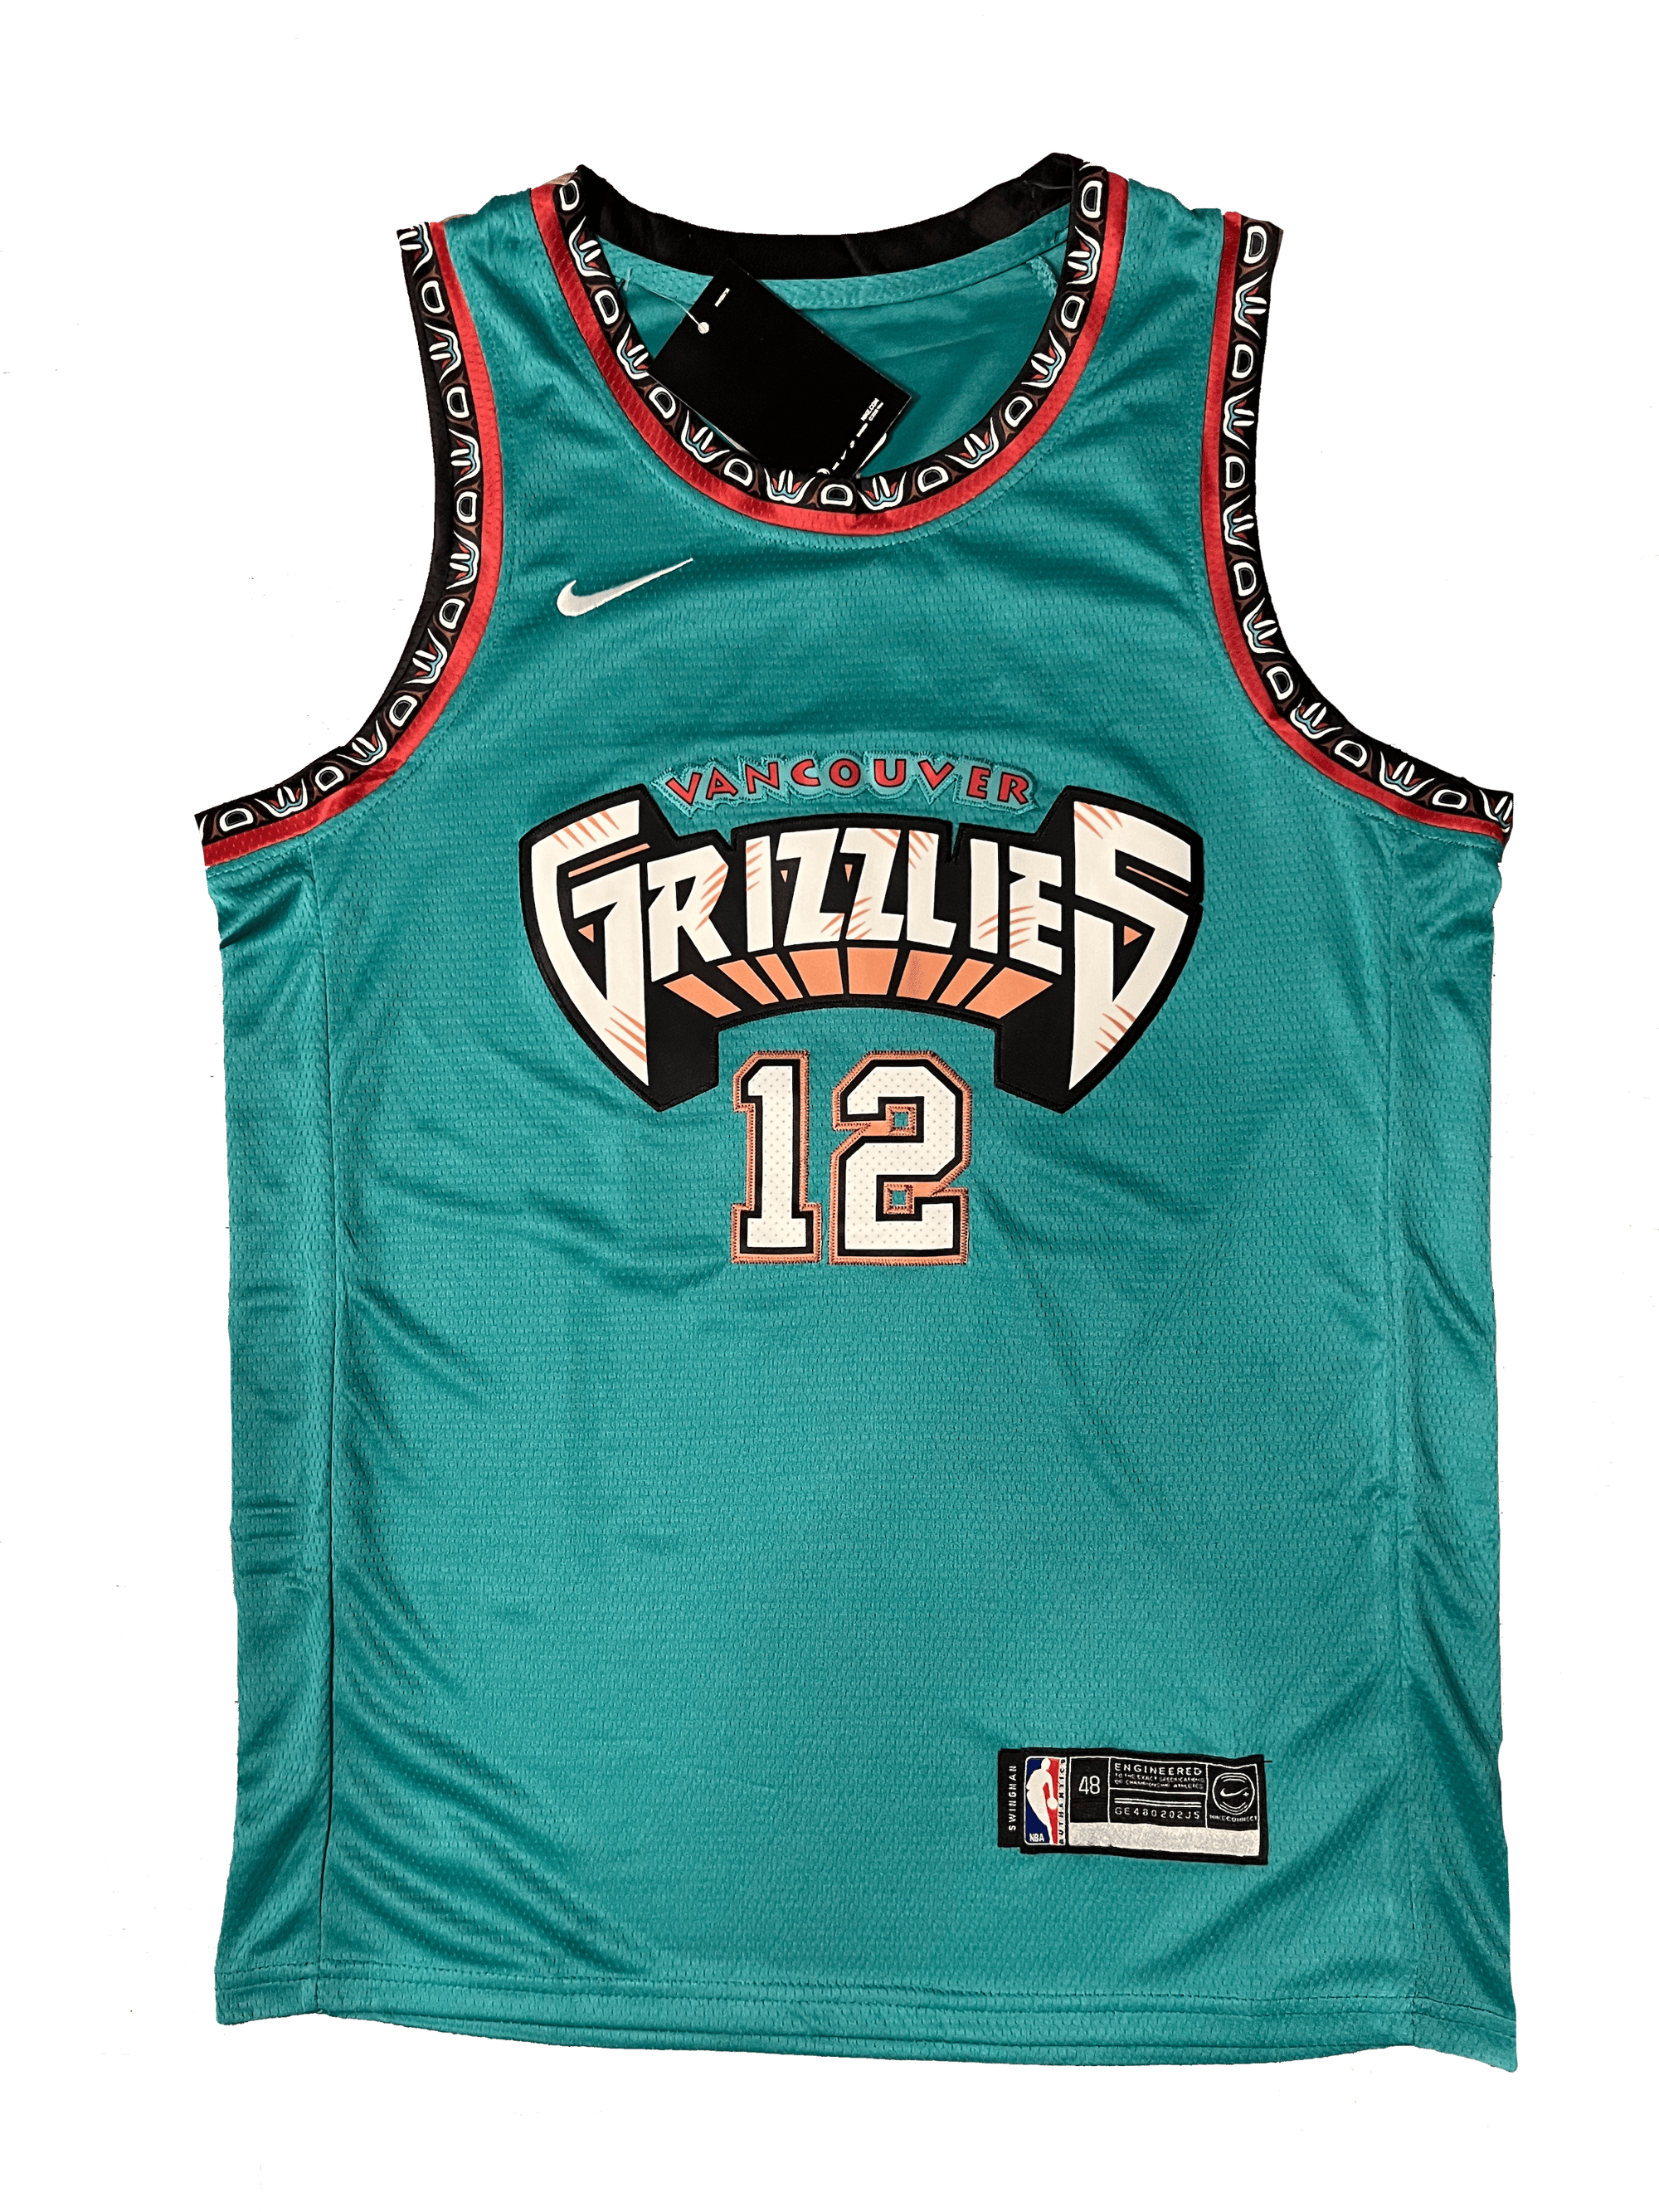 Memphis Grizzlies Jerseys, Ja Morant Grizzlies Jerseys, Grizzlies Uniforms